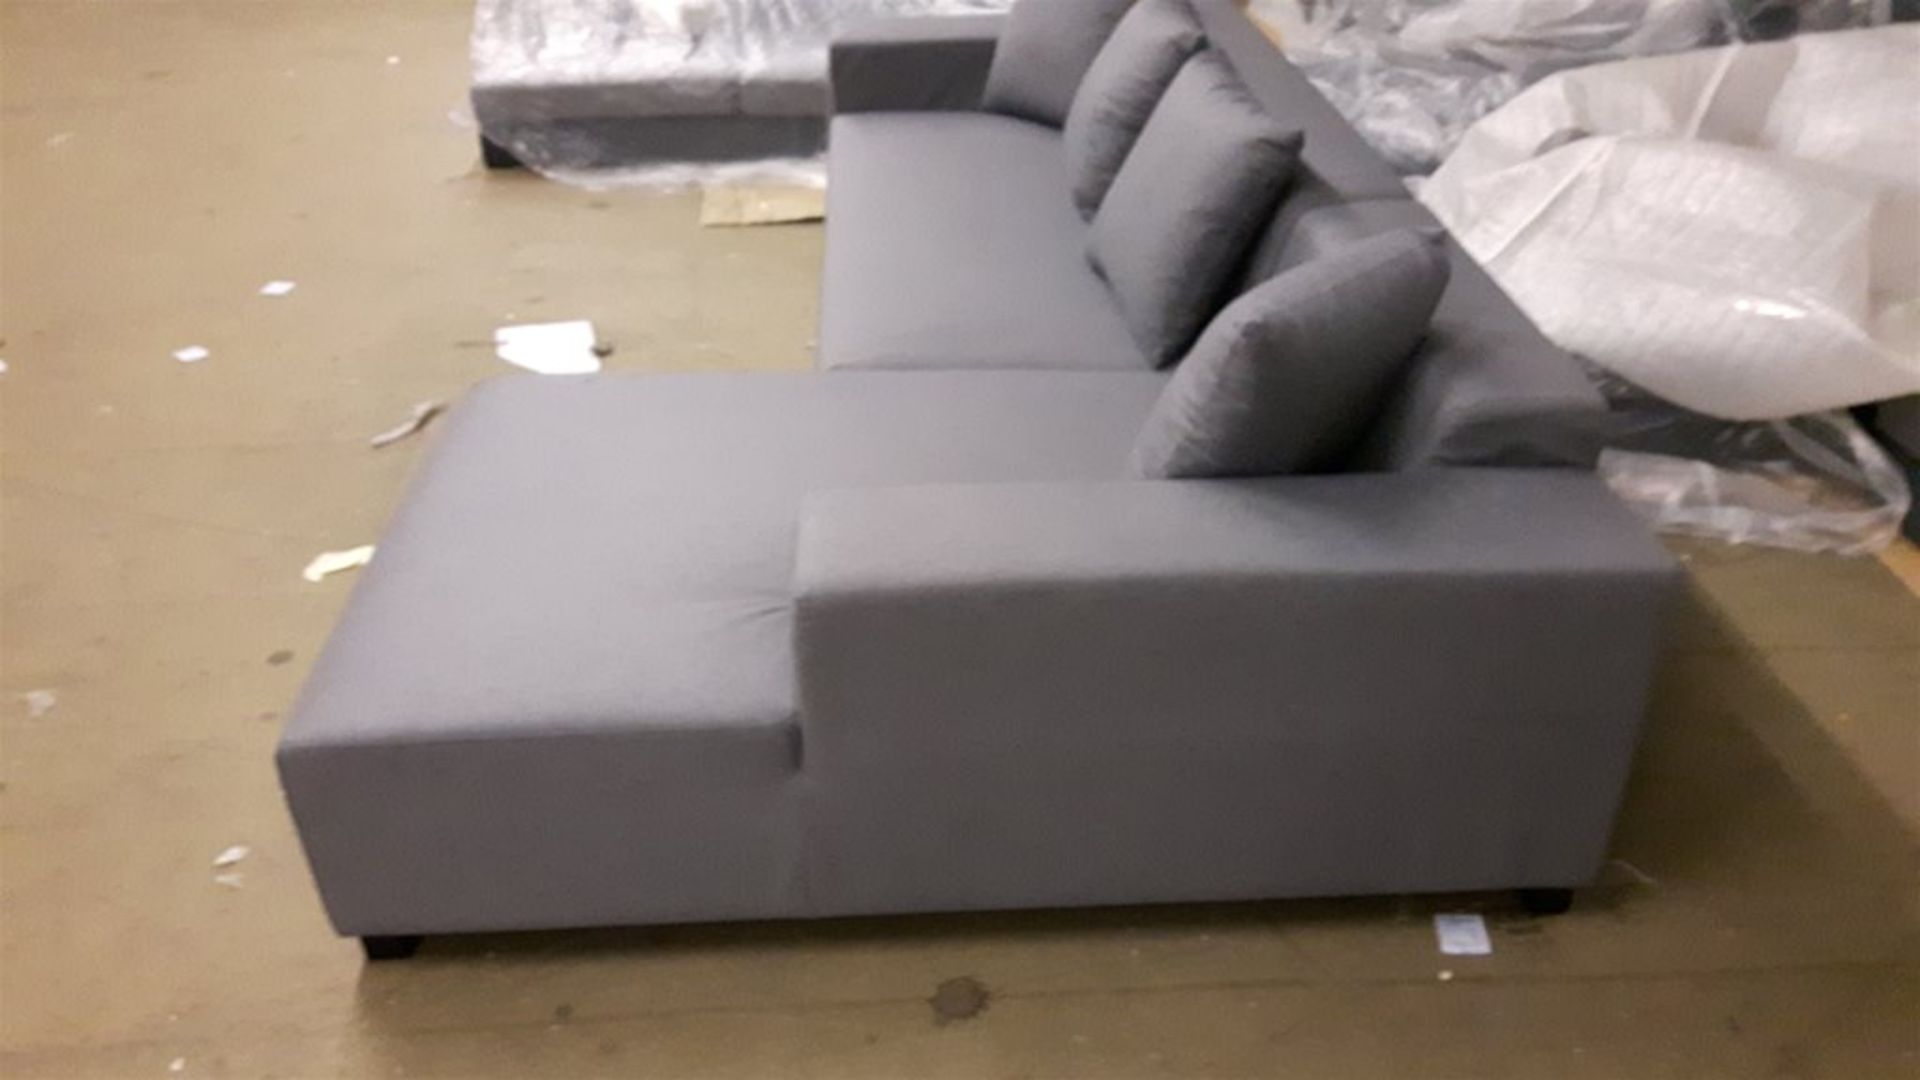 Amhurst Chaise Langue and sofa set. - Image 3 of 4